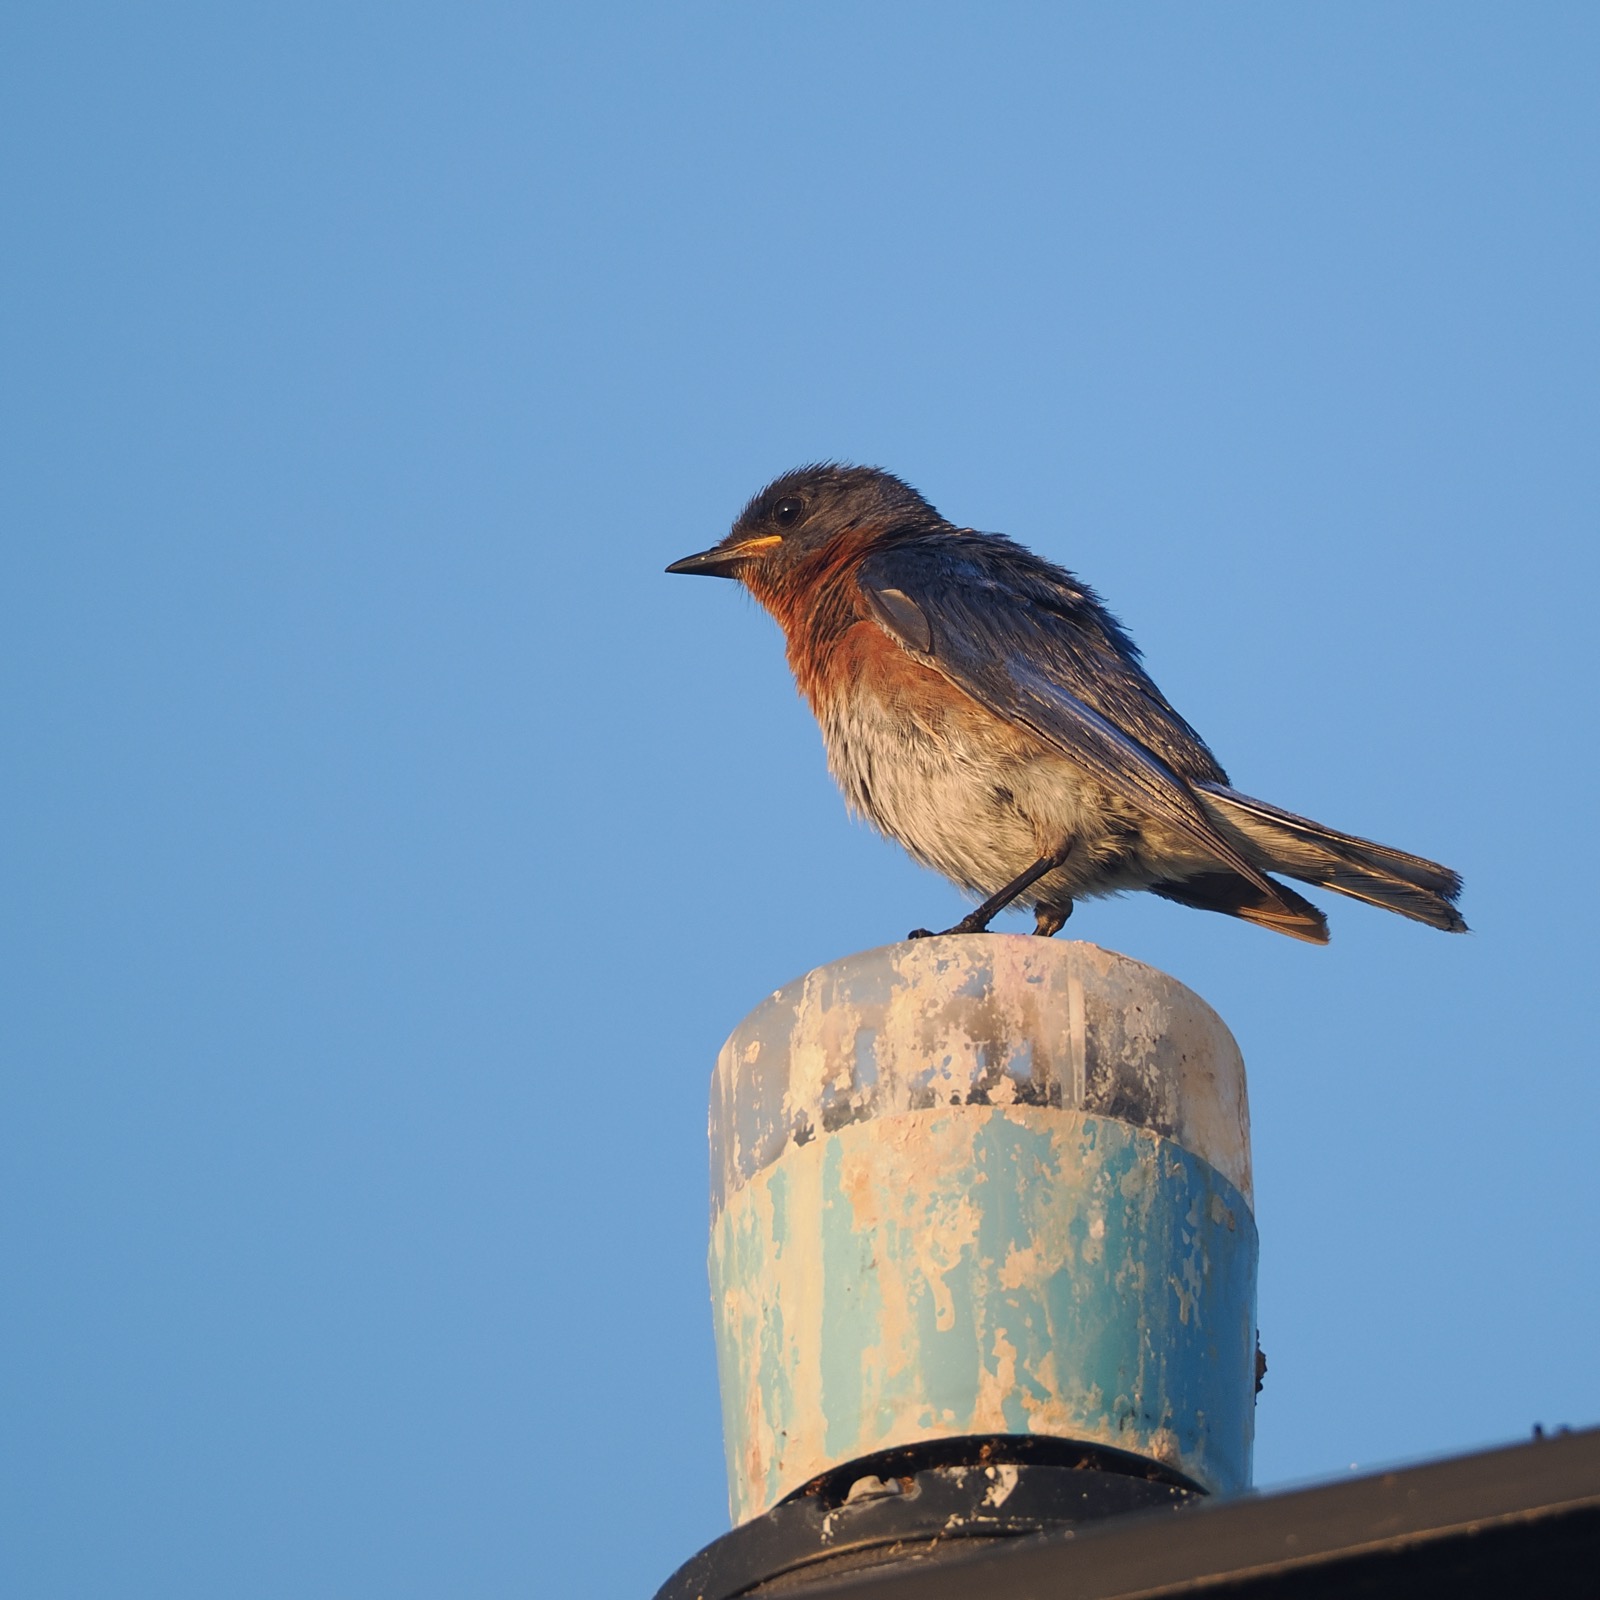 Closeup of a bluebird sitting on a lamp post light sensor against a blue sky.